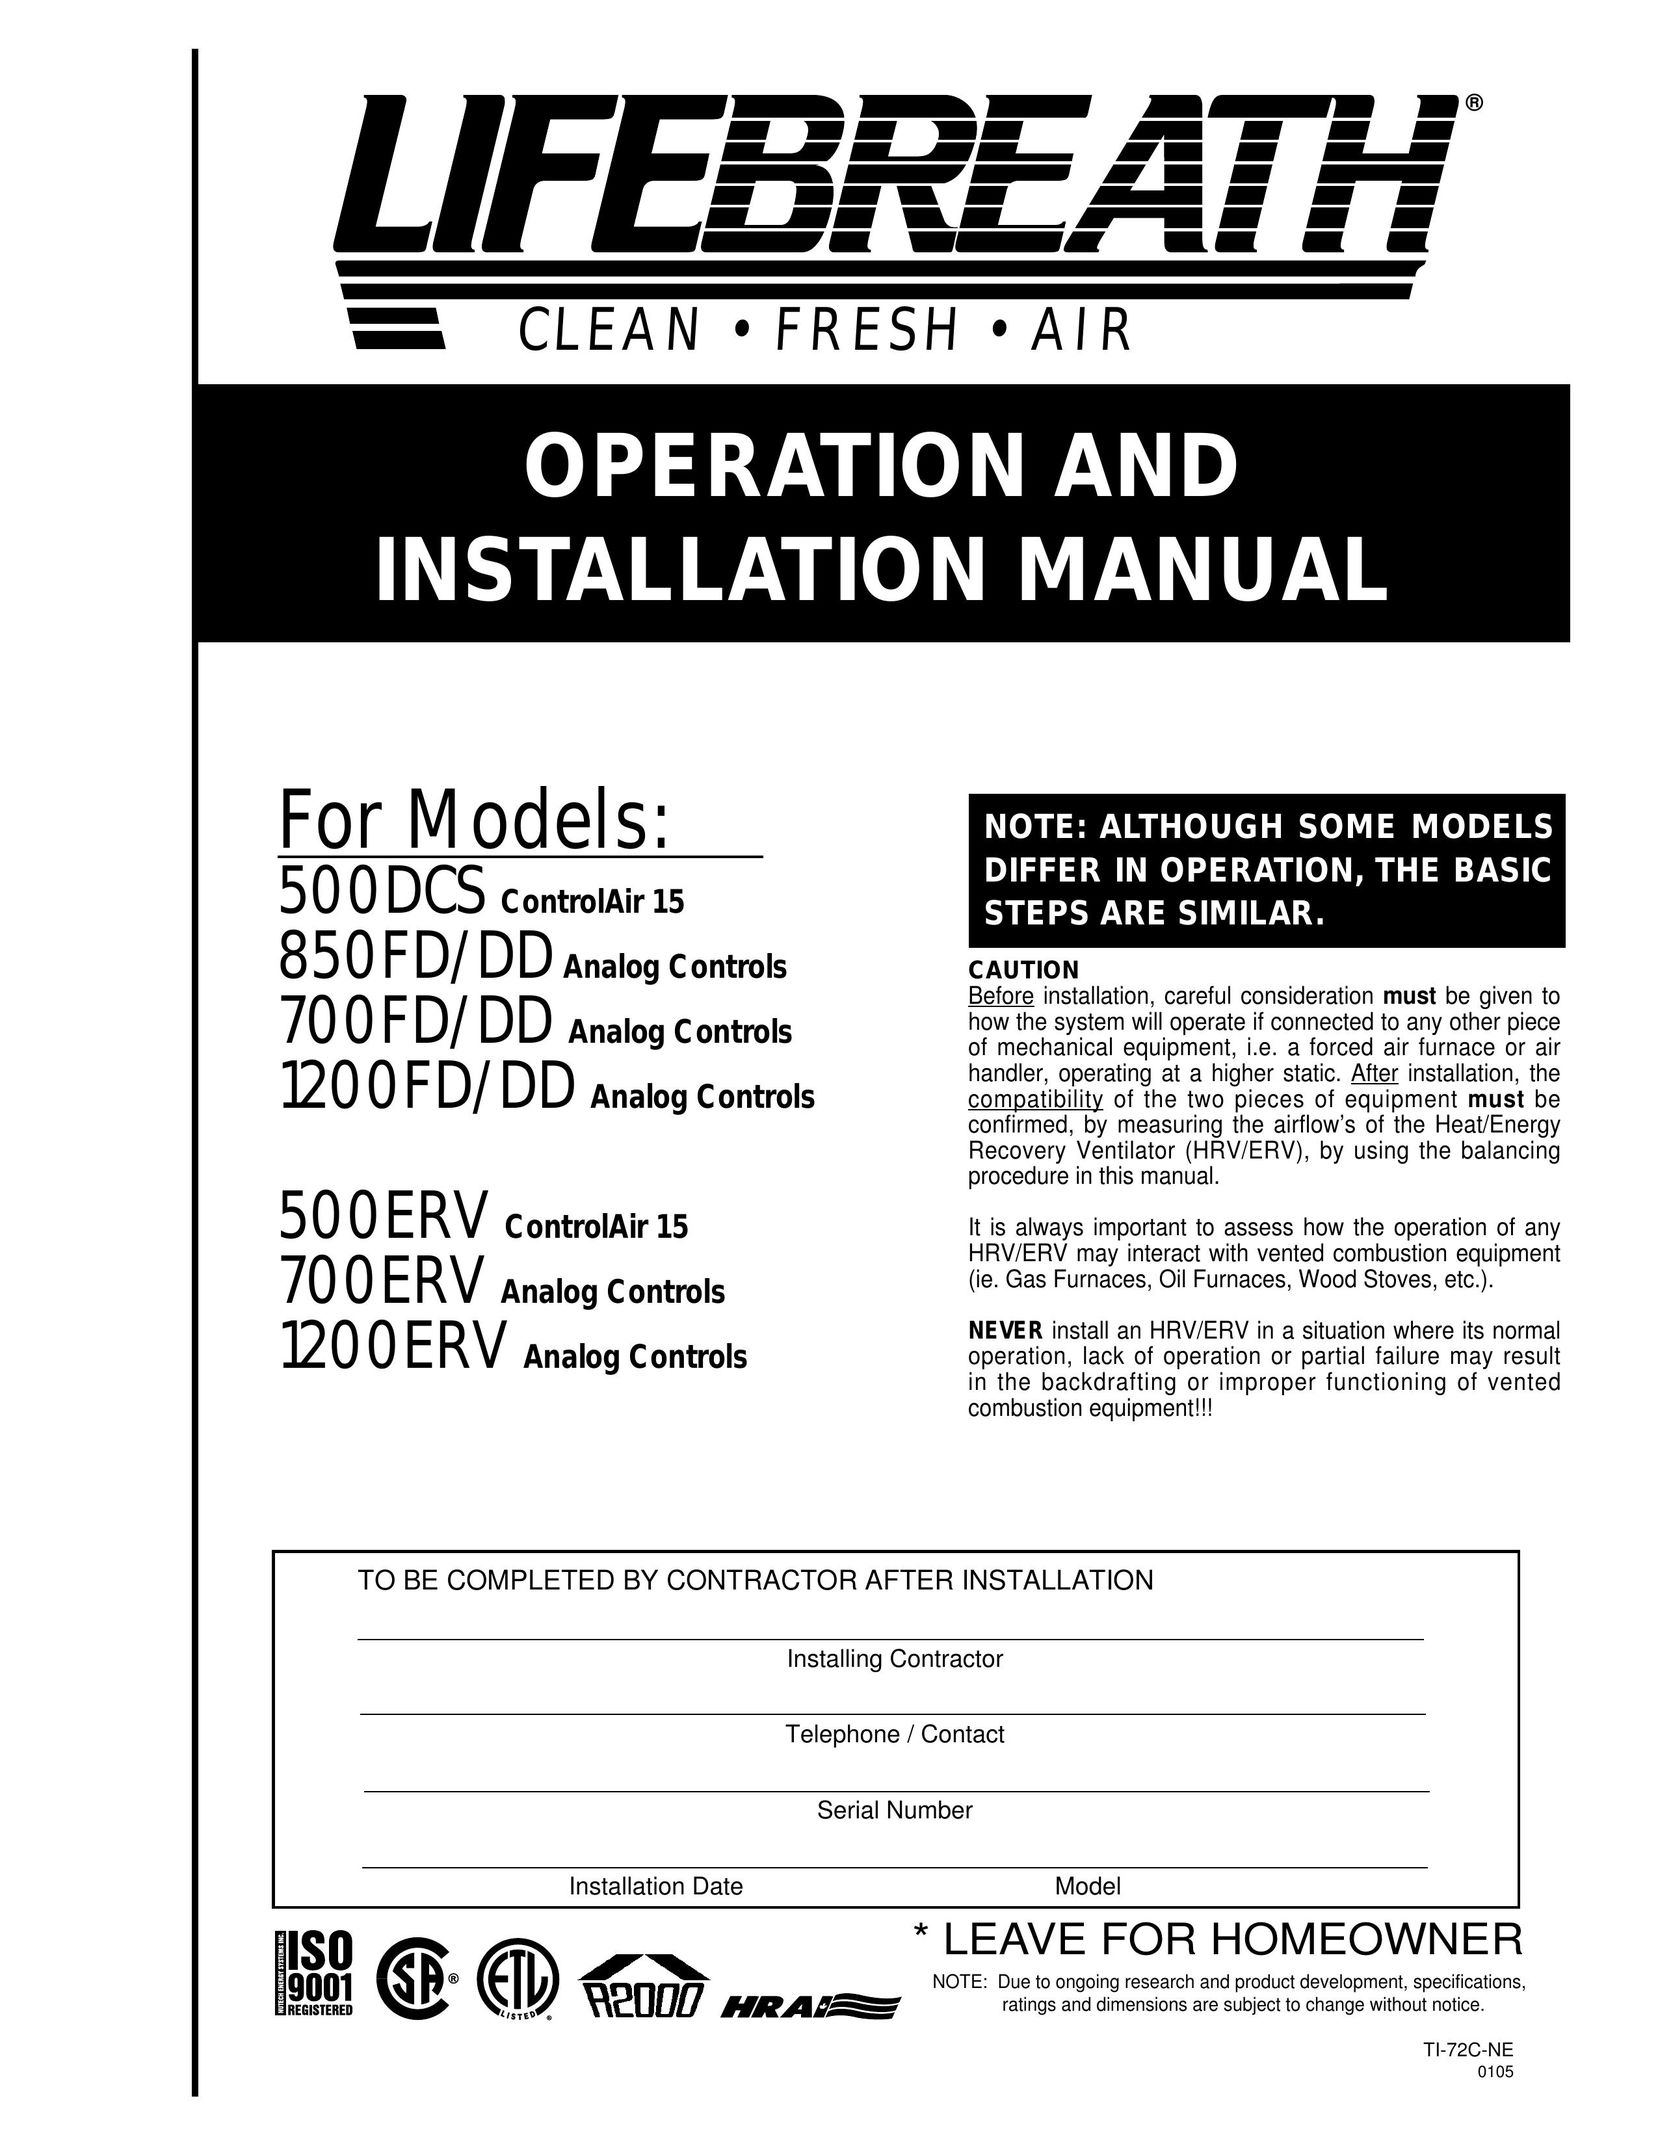 Lifebreath 1200ERV Air Cleaner User Manual